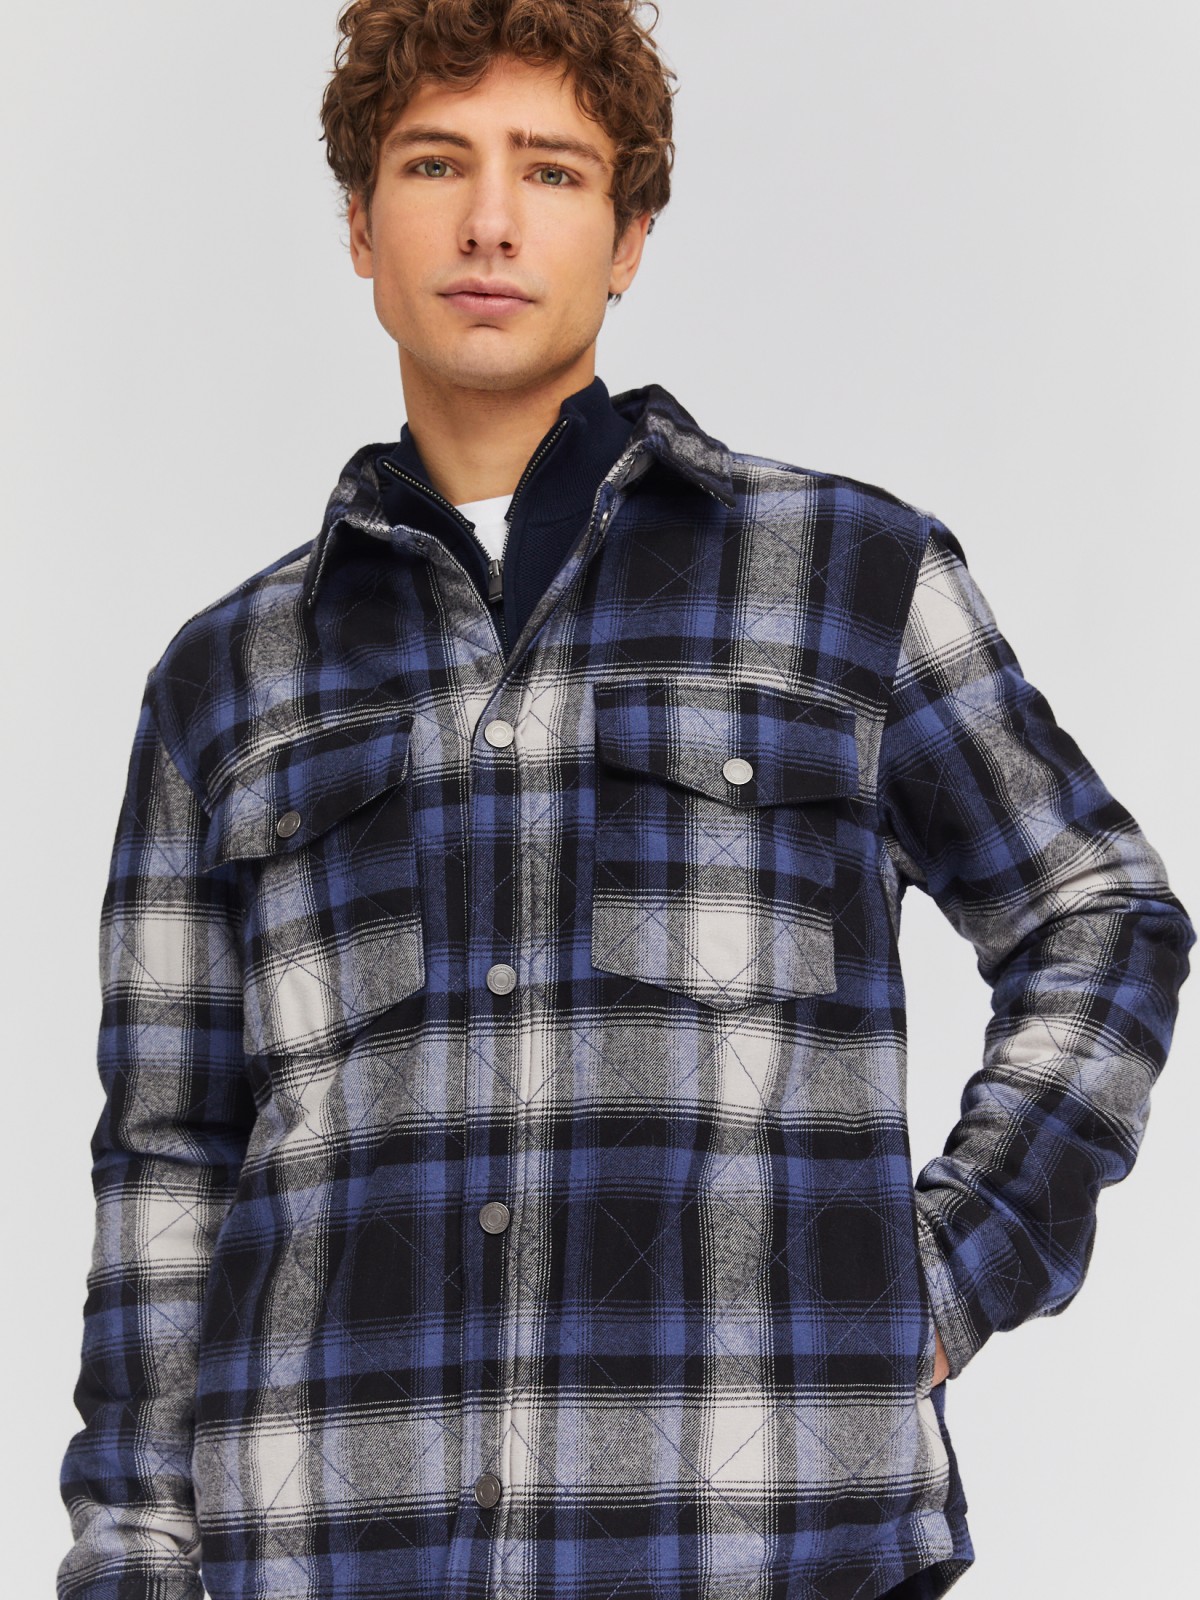 Утеплённая куртка-рубашка в клетку на синтепоне zolla 014135159104, цвет синий, размер S - фото 3